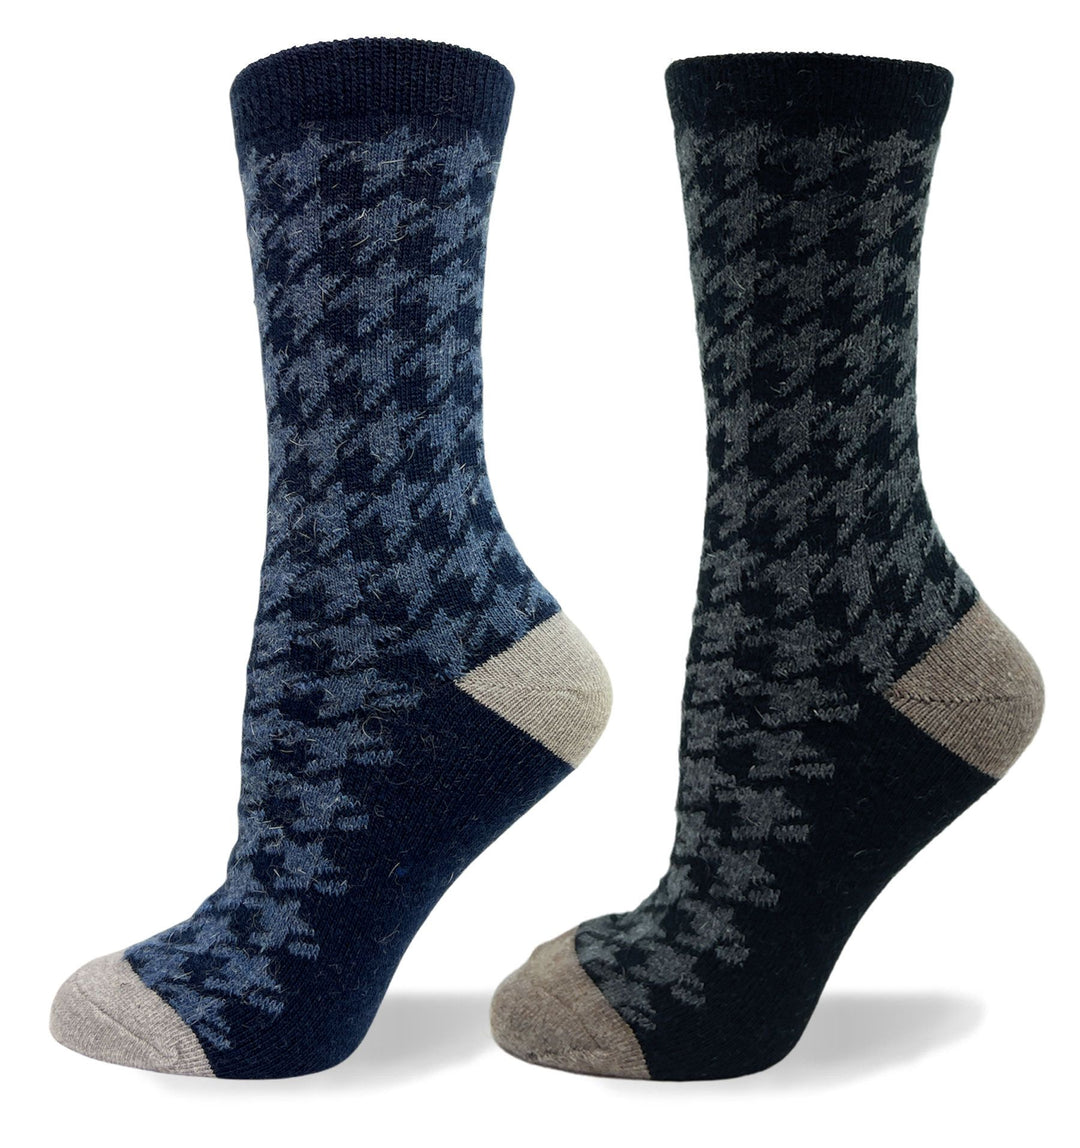 Houndstooth Dress Socks by Point Zero - Medium – Great Sox